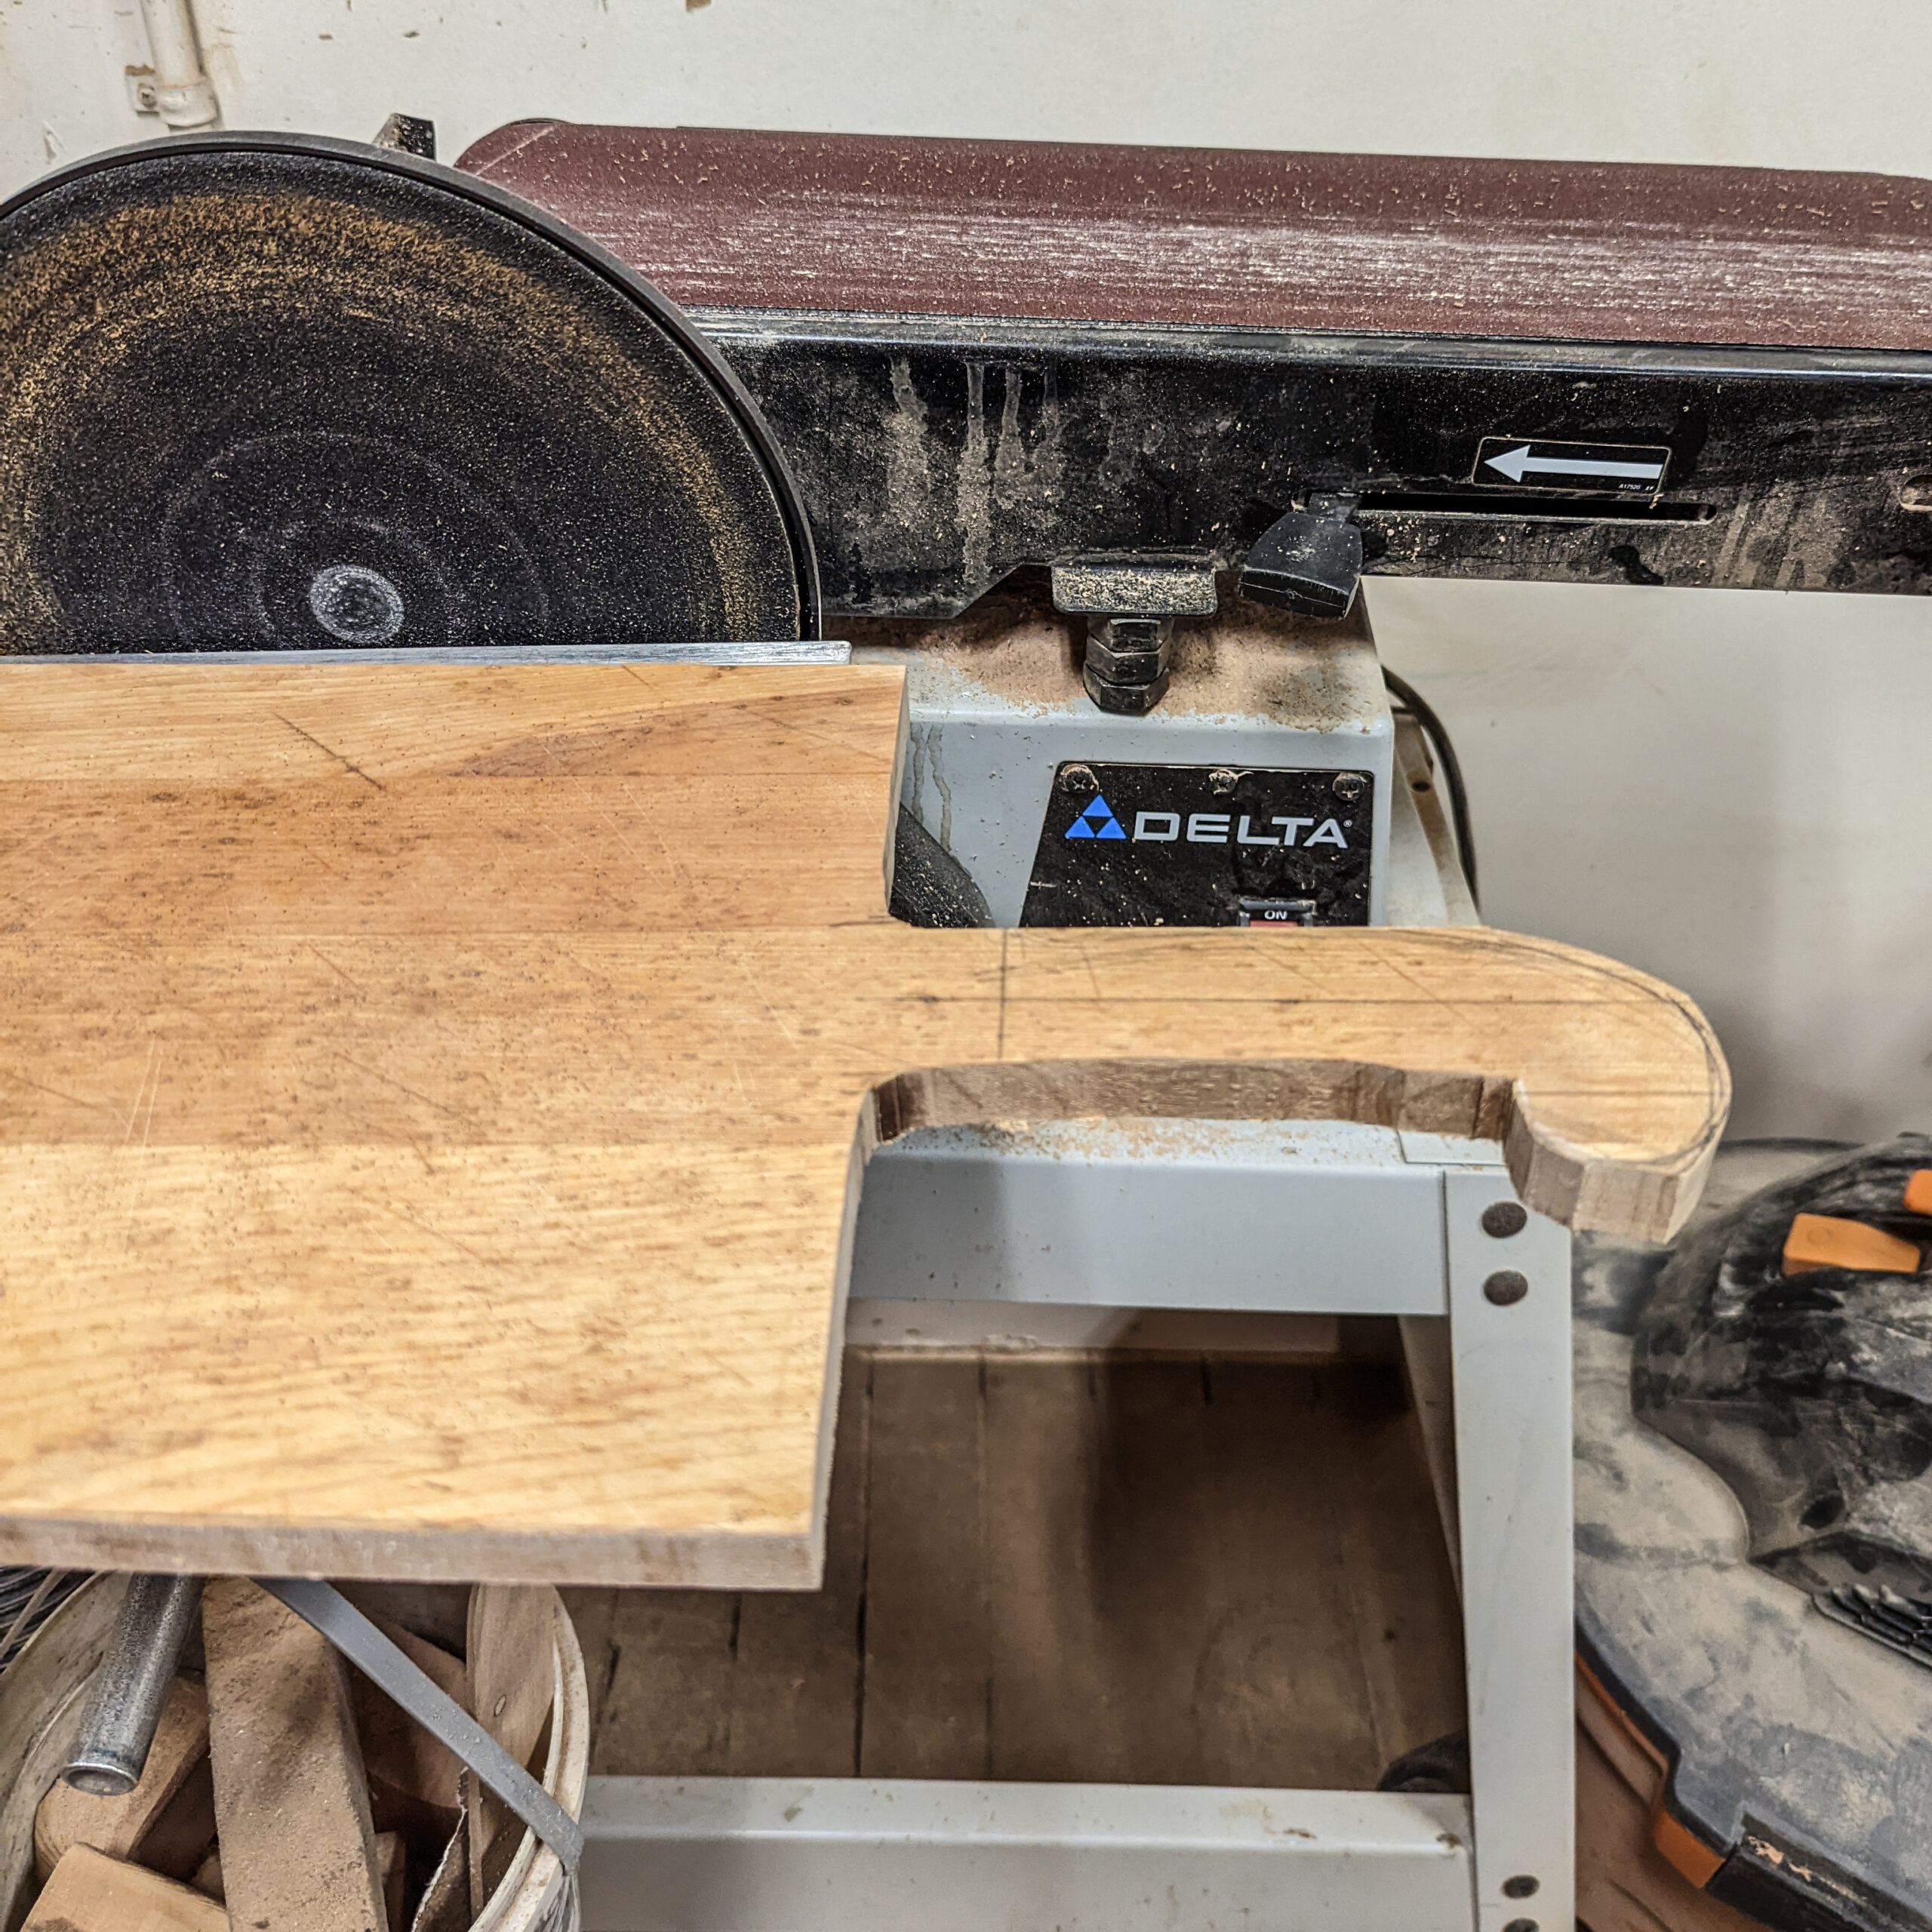 Using a belt sander to soften fresh cuts on a cutting board.